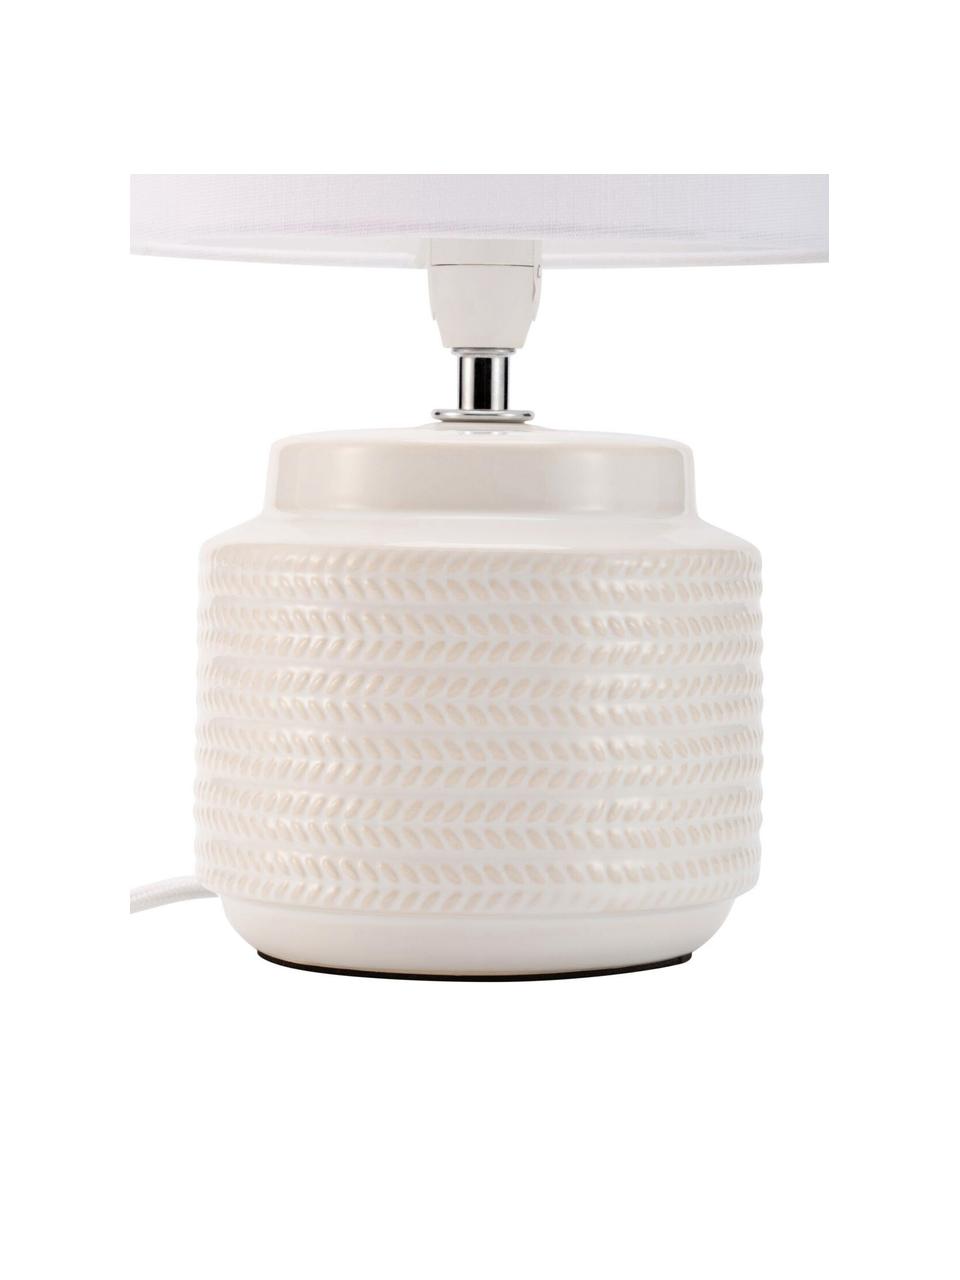 Kleine tafellamp Bright Soul, Lampenkap: stof, Lampvoet: keramiek, Beige, crèmewit, Ø 18 x H 30 cm